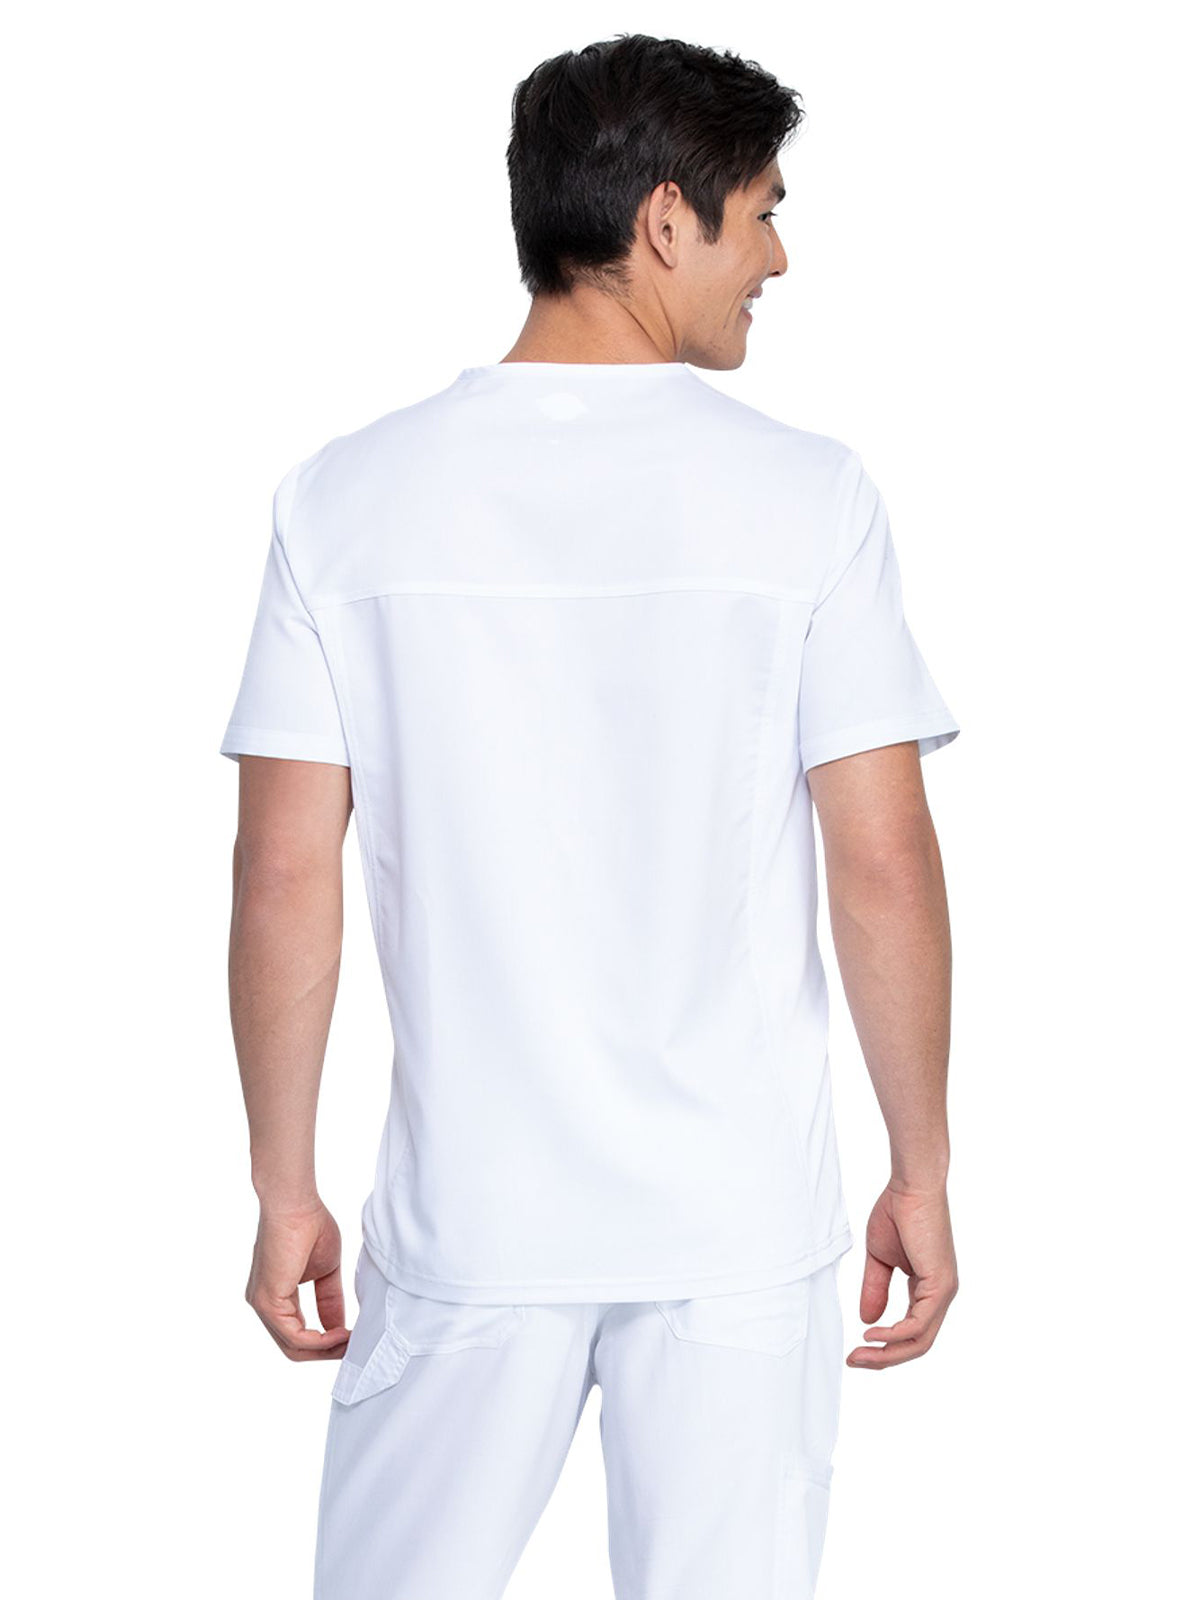 Men's 2-Pocket Tuckable V-Neck Top - DK865 - White